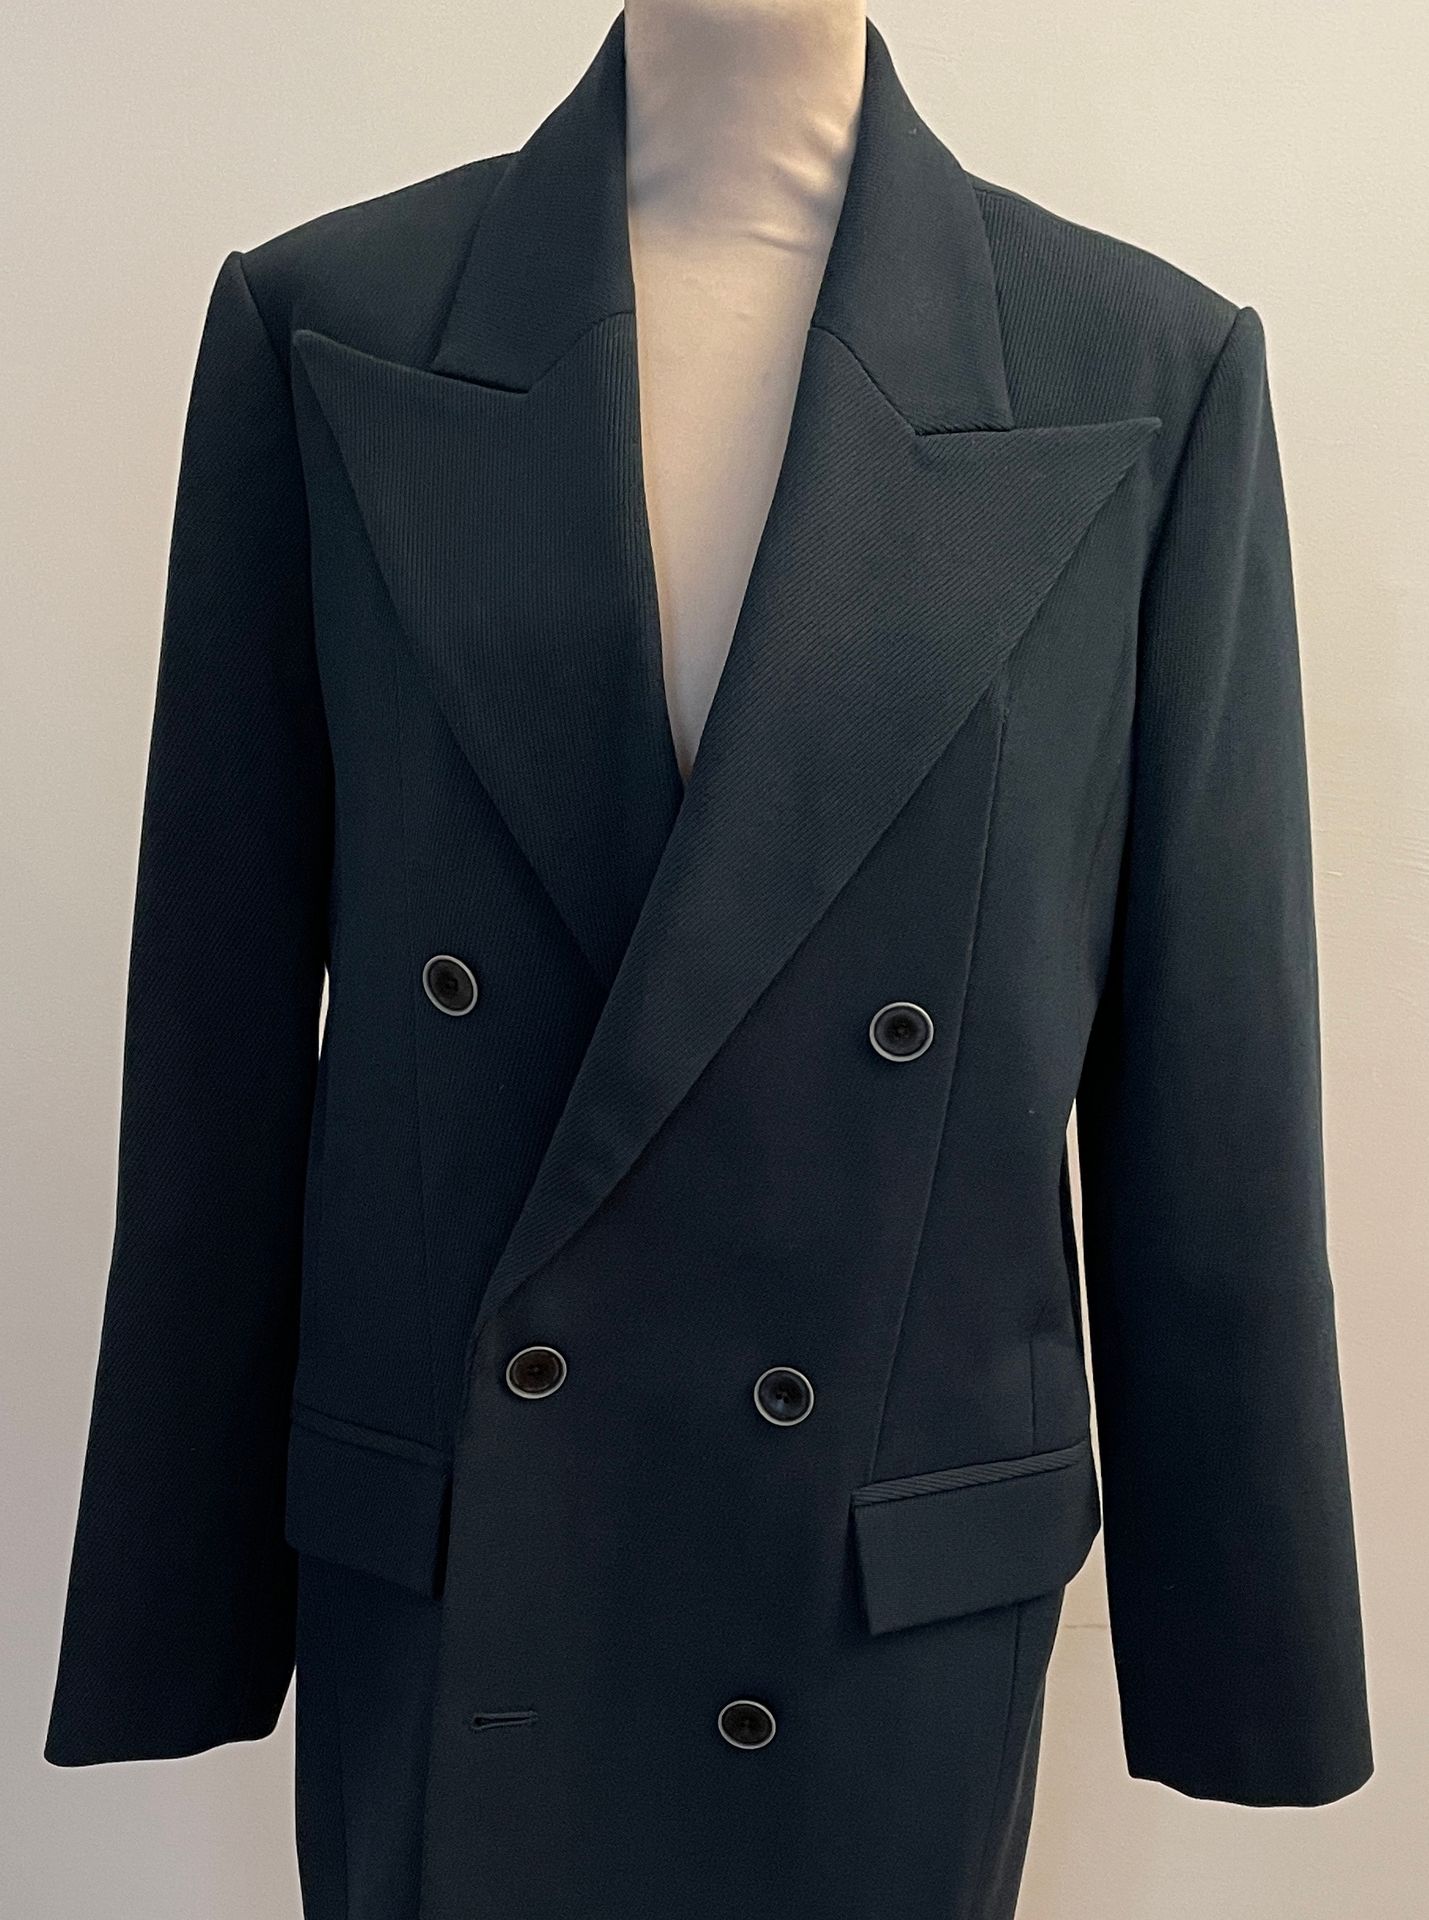 Null 必要性意义

深绿色羊毛男式长外套。

S.M

肩宽43厘米，袖长64厘米，衣领至衣底长度114厘米

带标签，售价1400欧元。